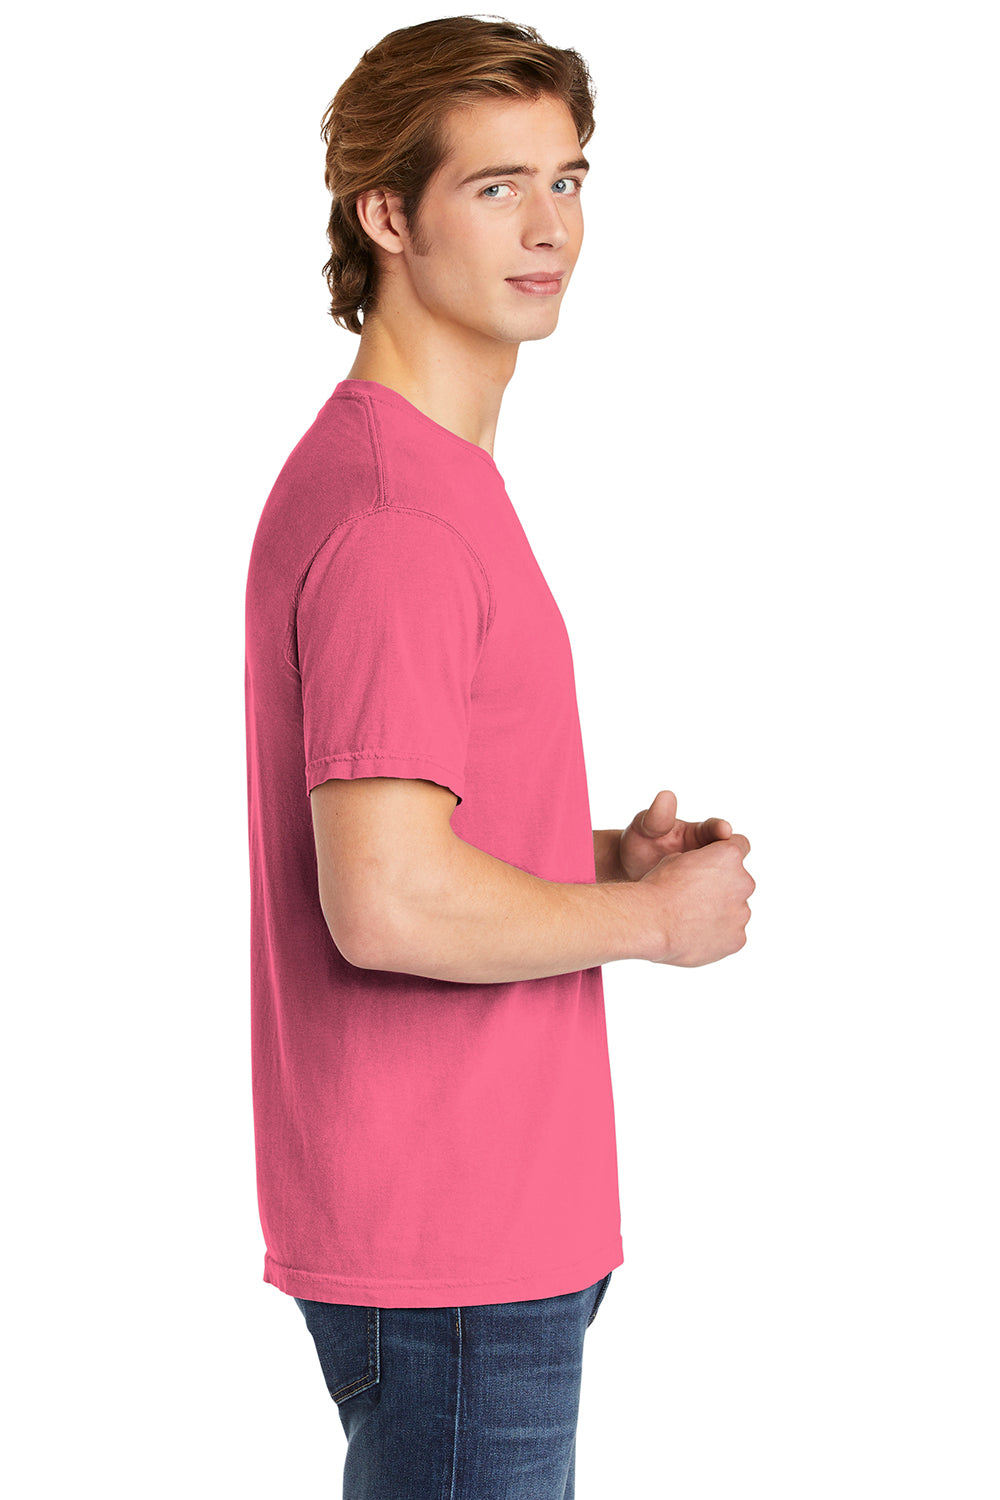 Comfort Colors 1717/C1717 Mens Short Sleeve Crewneck T-Shirt Crunchberry Pink Side